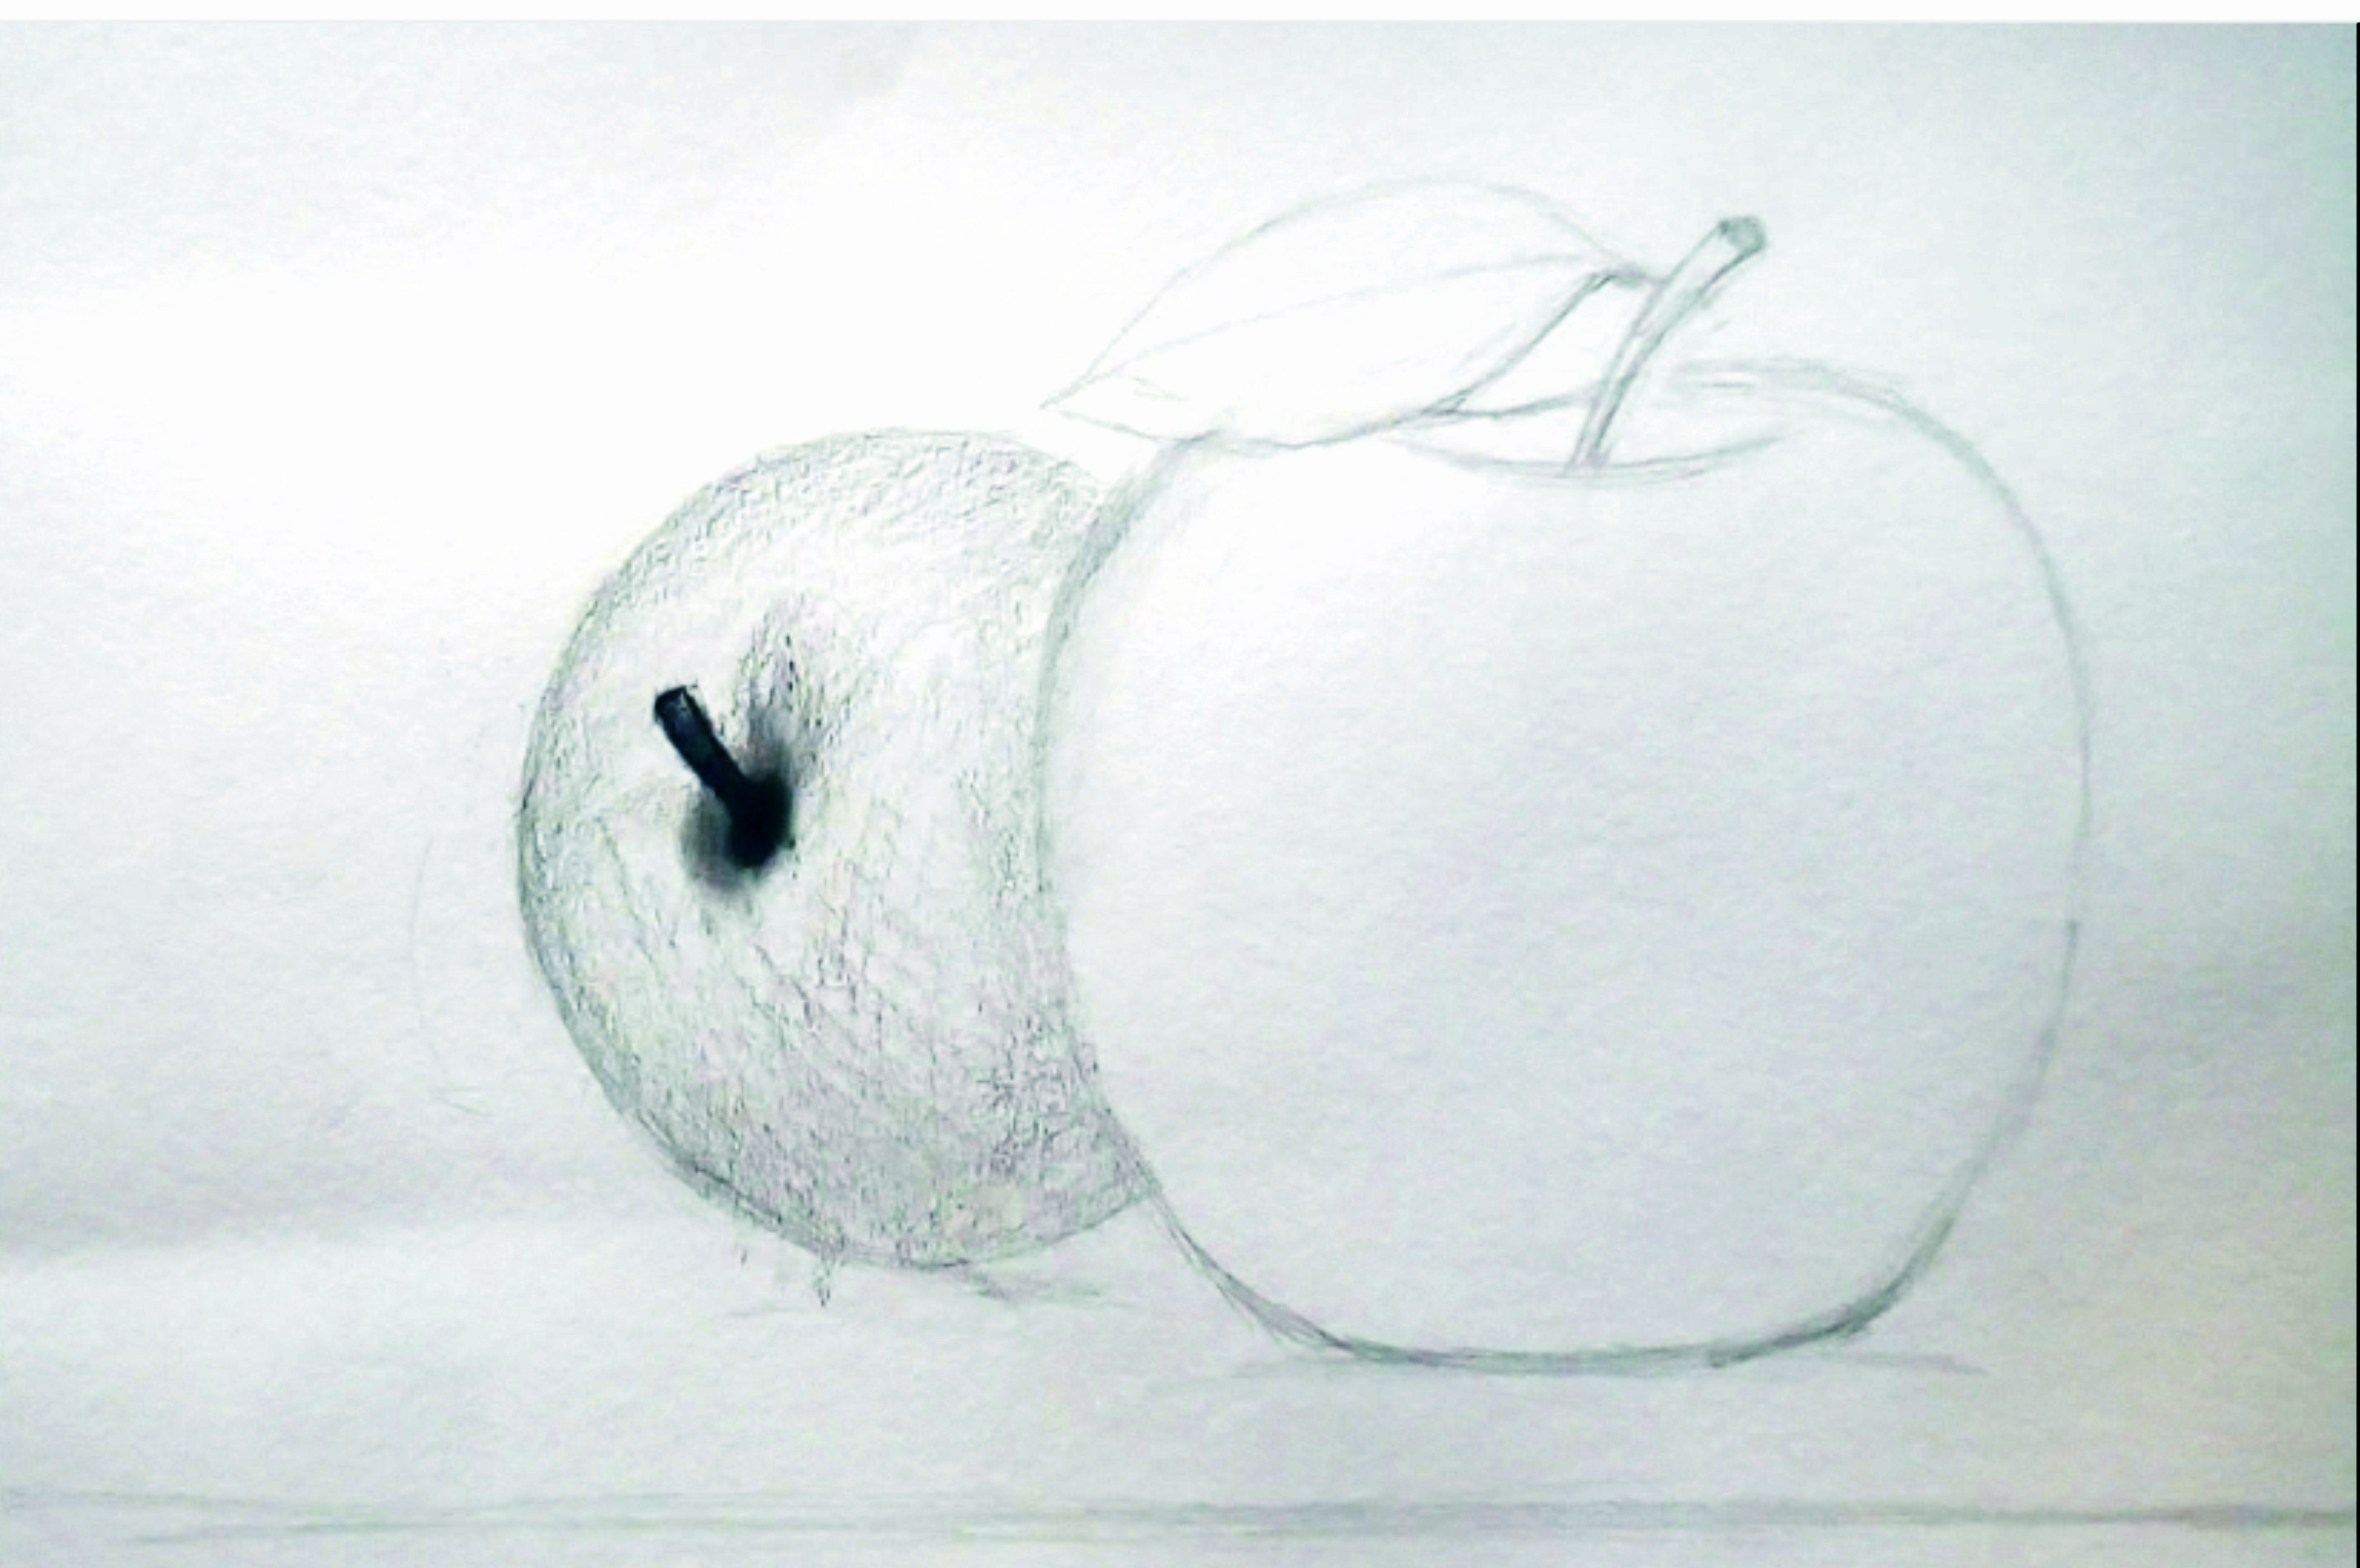 ArtStation - Apple sketch